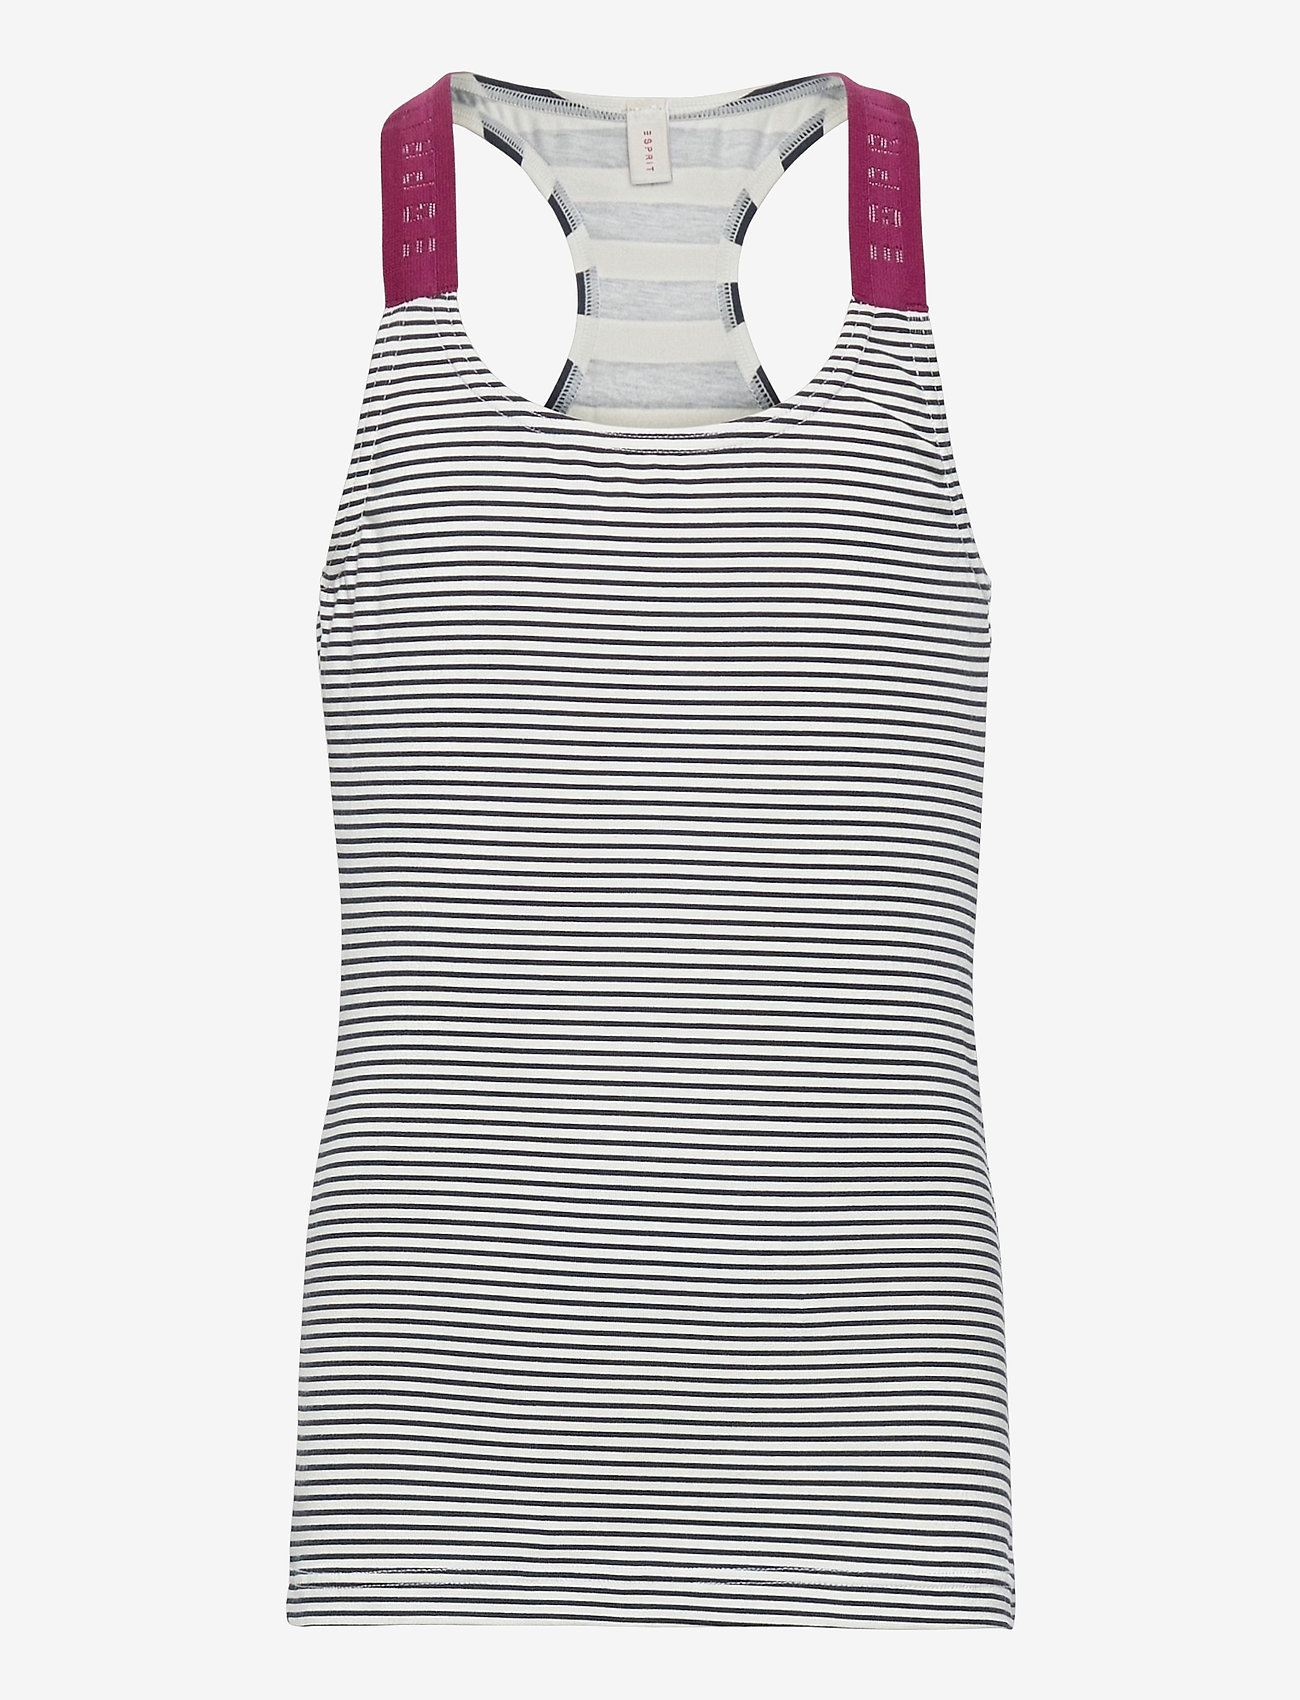 Esprit Bodywear Kids - Striped top made of stretch cotton - tanktops - navy - 0